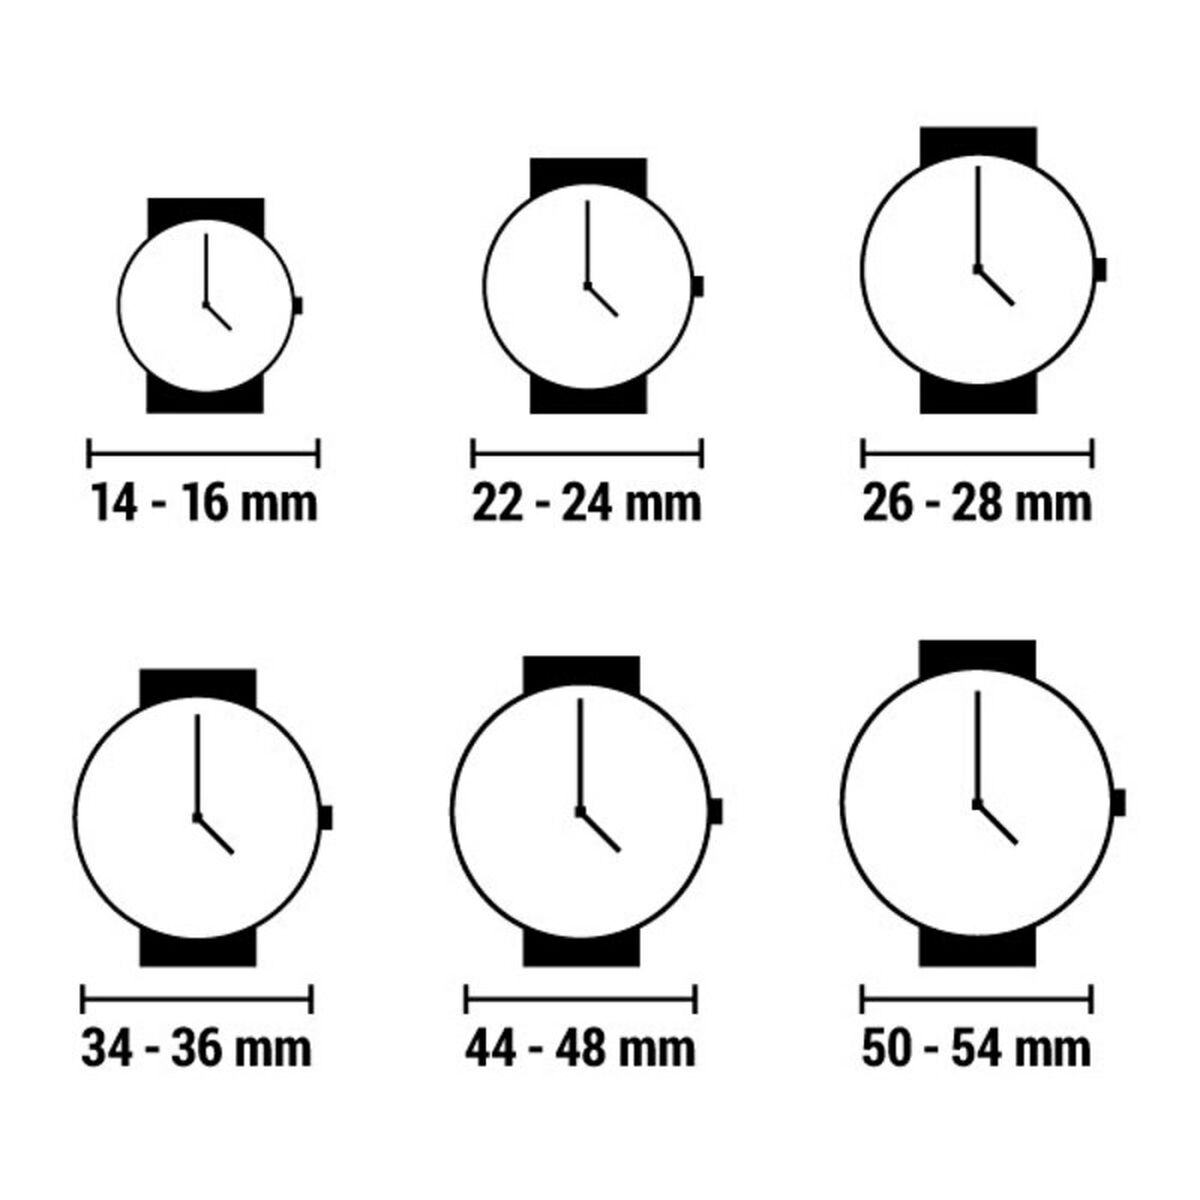 Horloge Dames Arabians DBA2246B (Ø 33 mm)